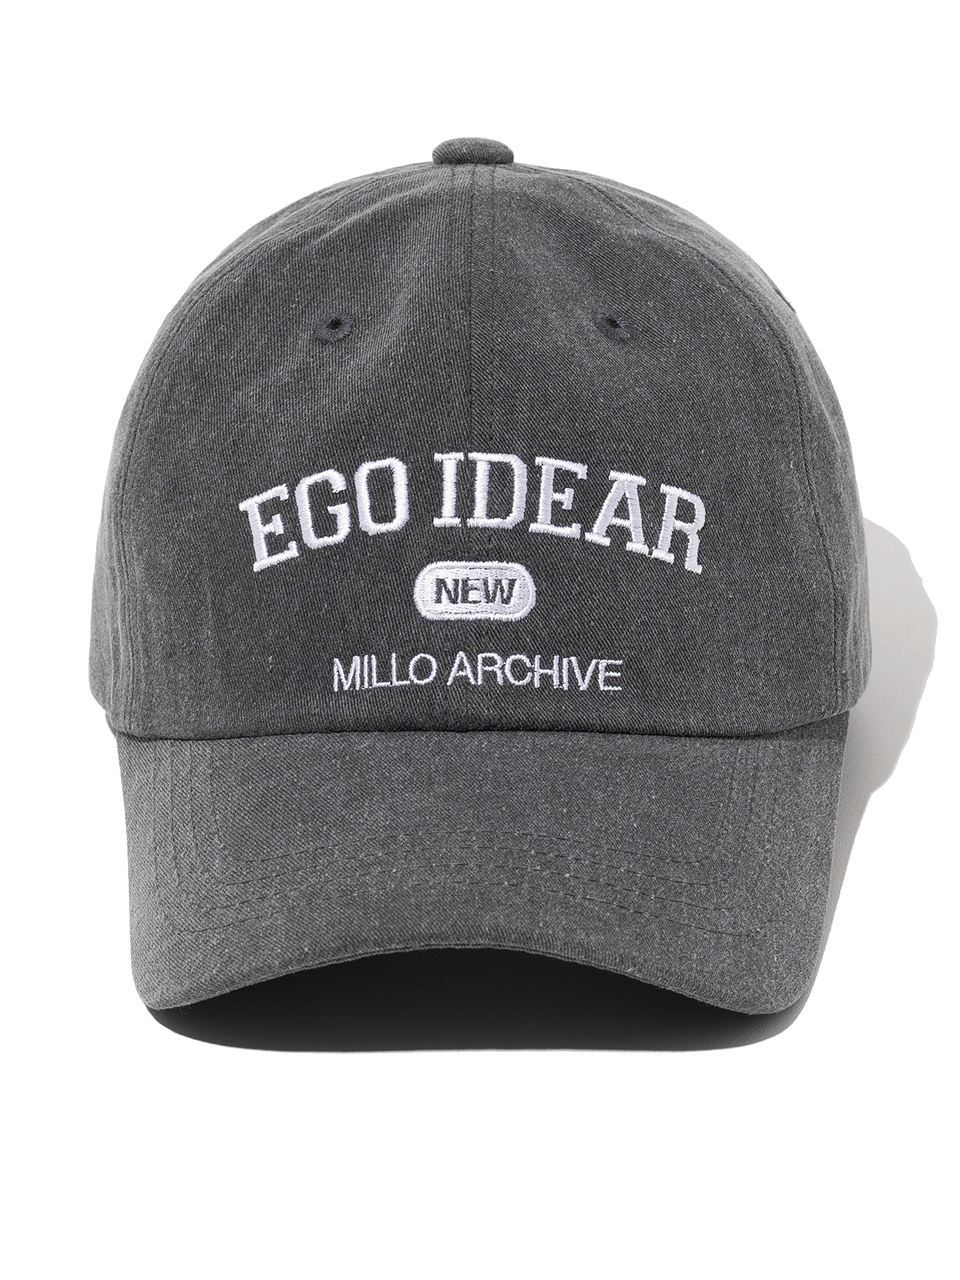 Ego Ideal Ball Cap - Stone Black